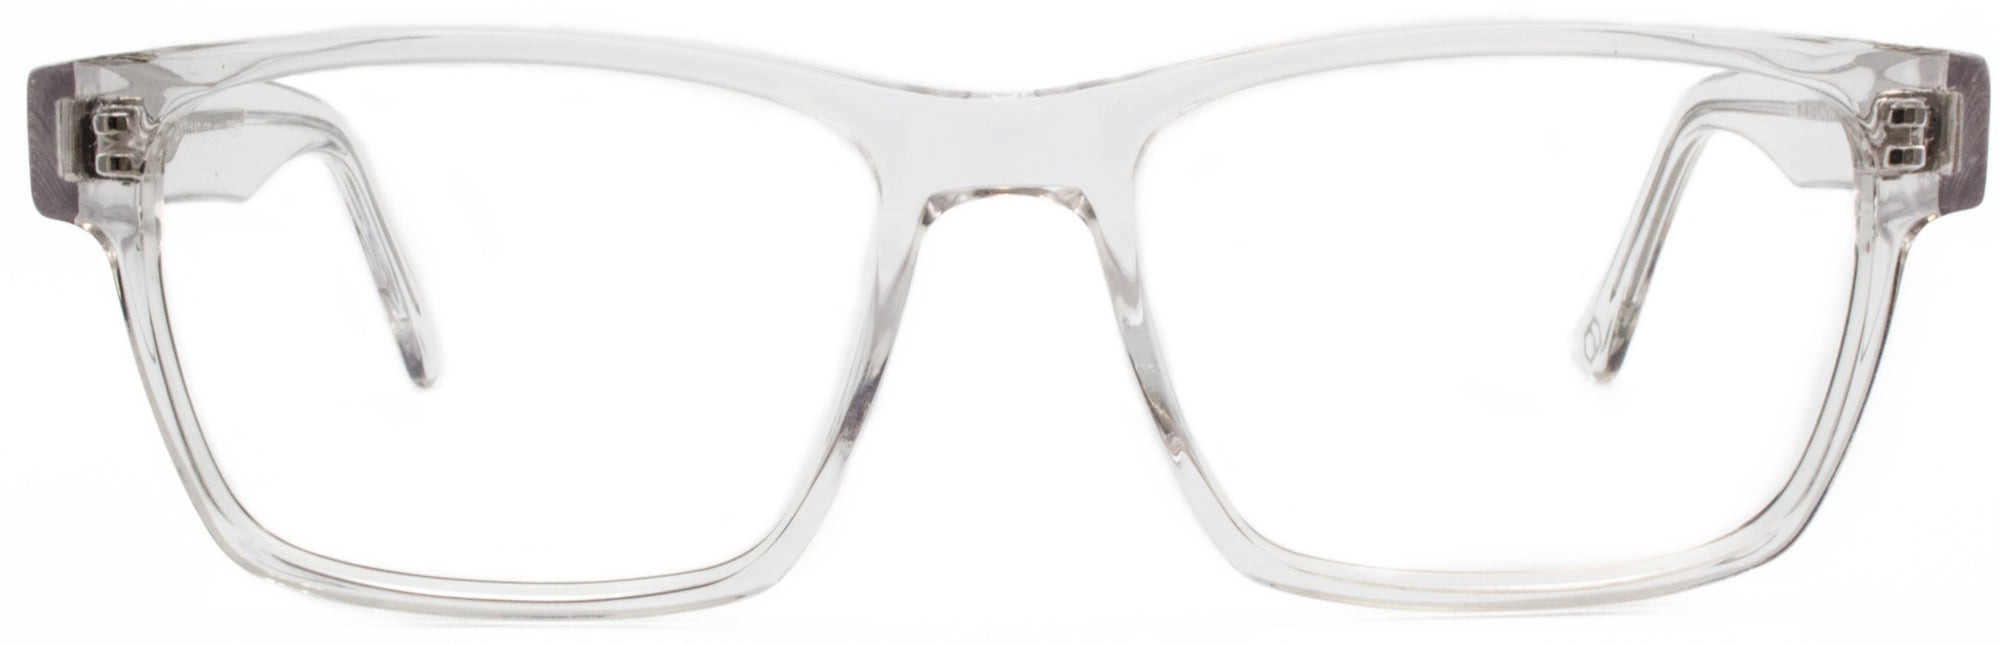 Alexander Daas - Remy Eyeglasses - Crystal - Front View